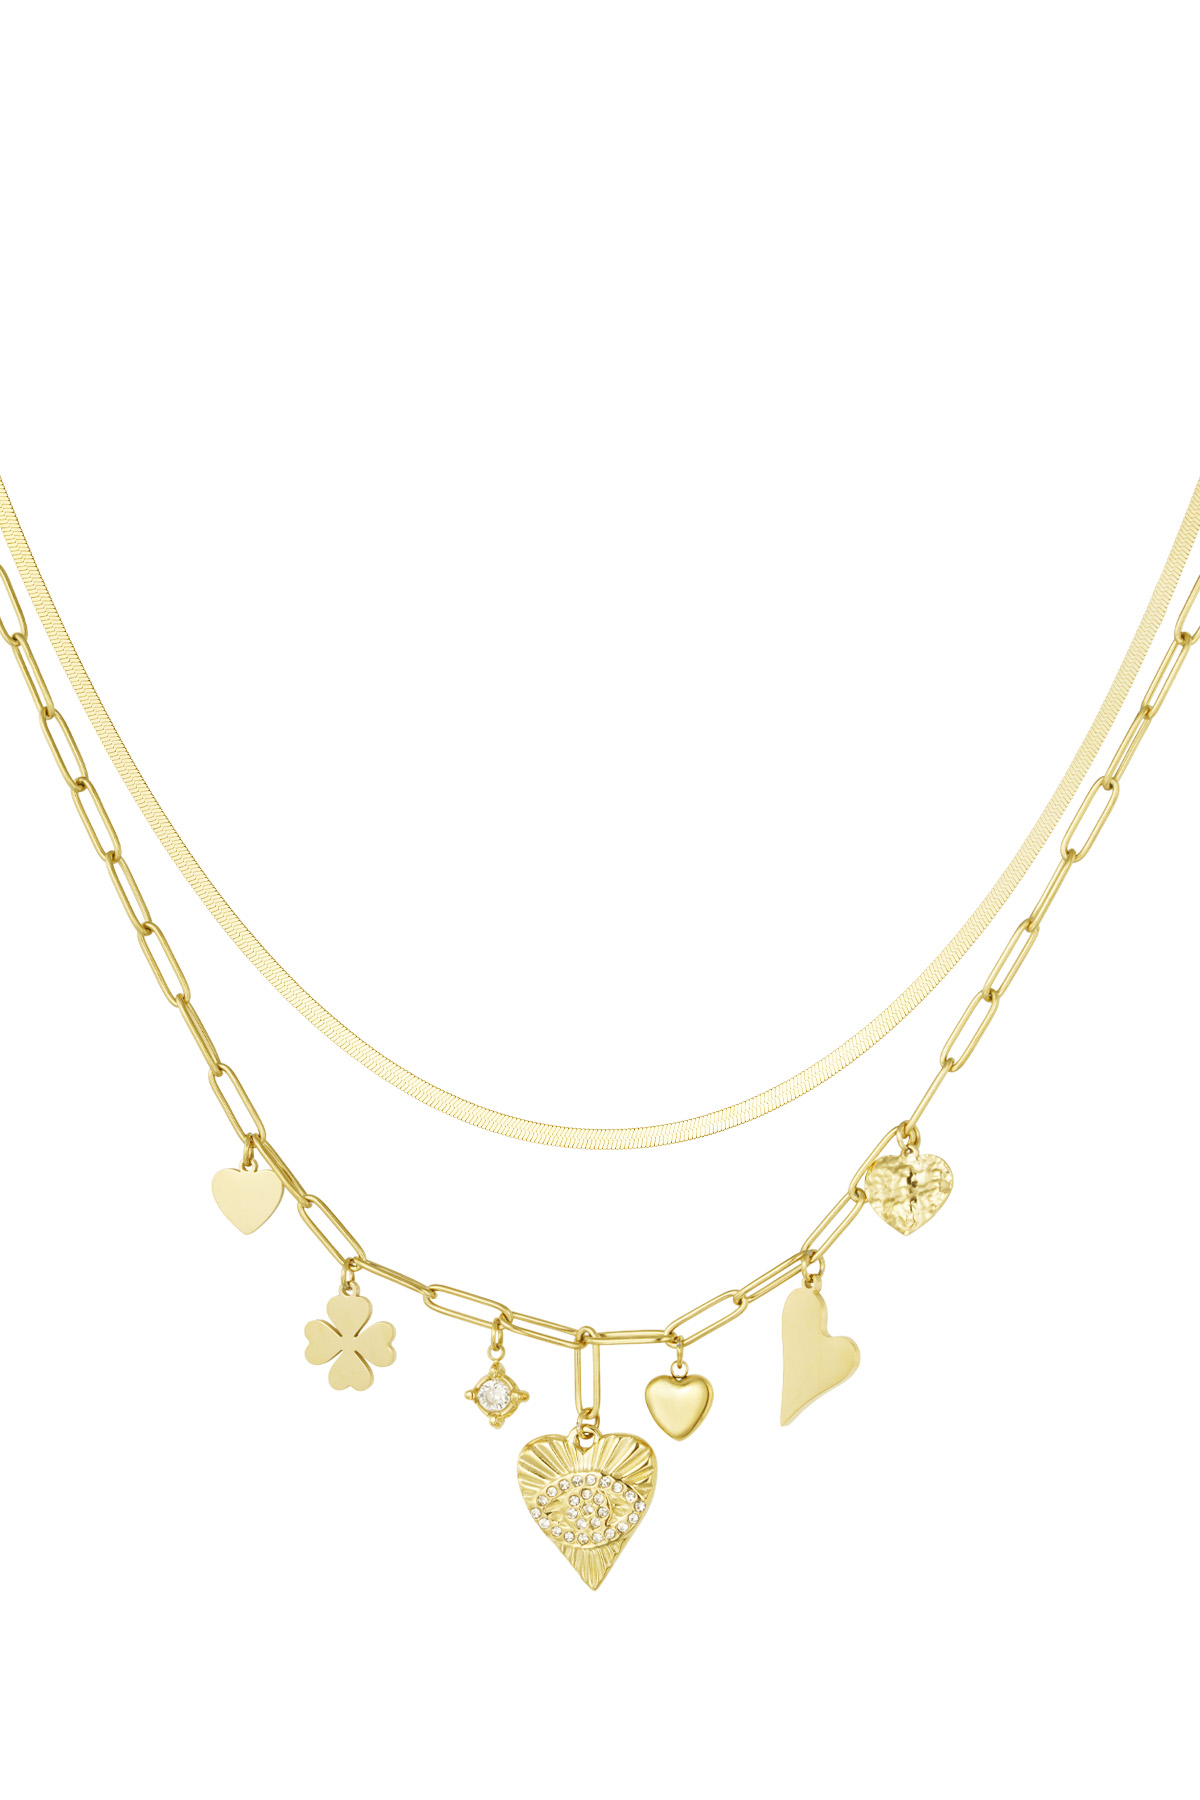 Charm-Halskette Glückszahl 7 – Gold